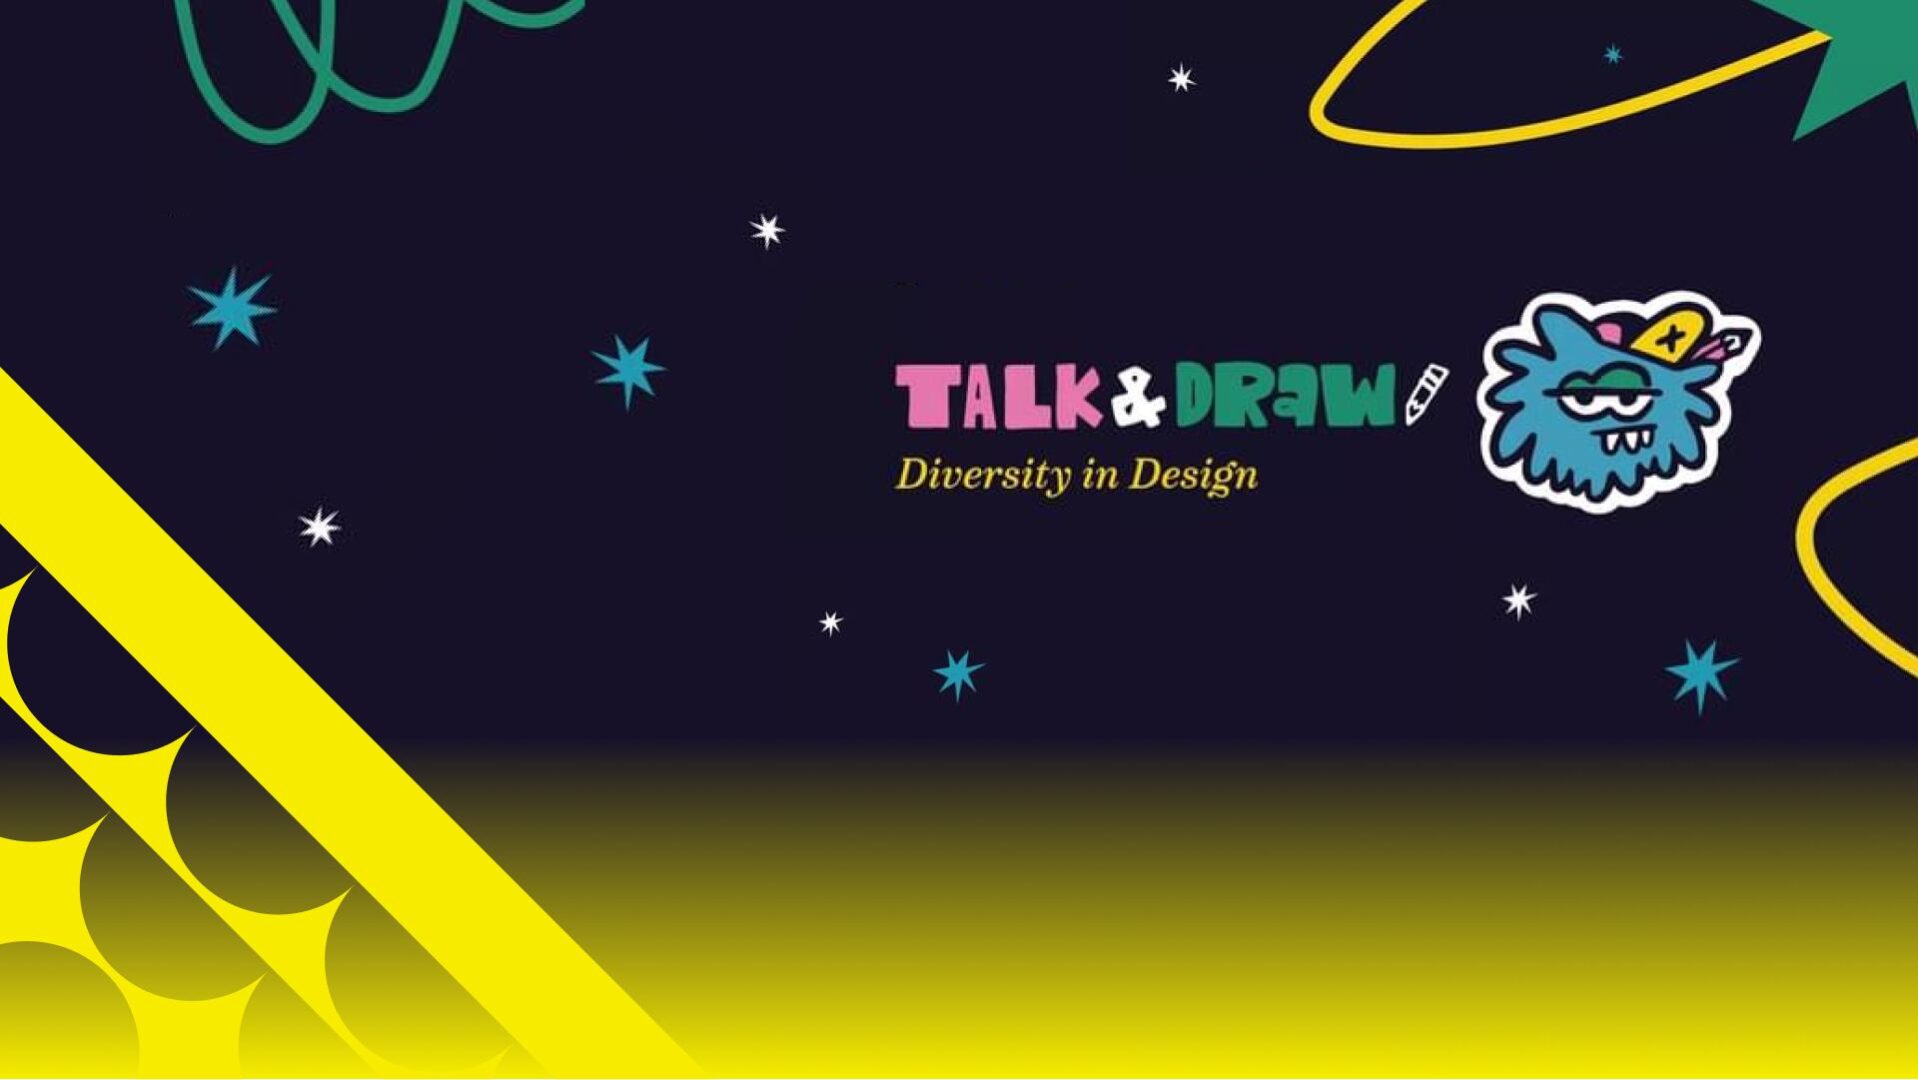 DesignOpp presents Talk & Draw - An interactive conversation on Diversity